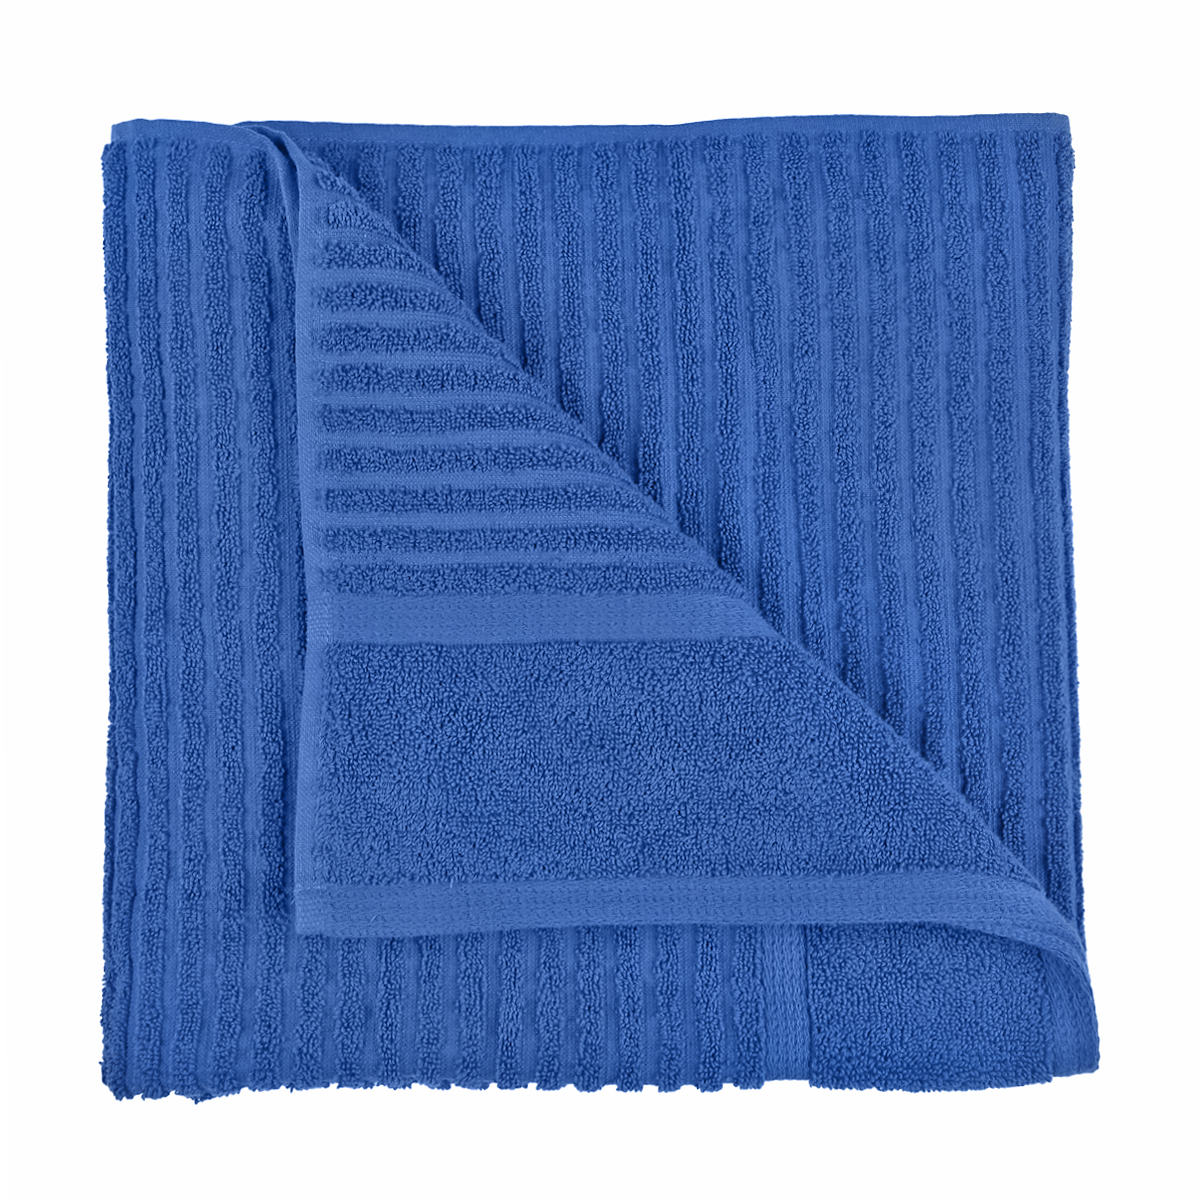 Bath Towel Kmart - Cannon Hygrocotton Perfect Bath Towel, Hand Towel Or Washcloth - Find plush 